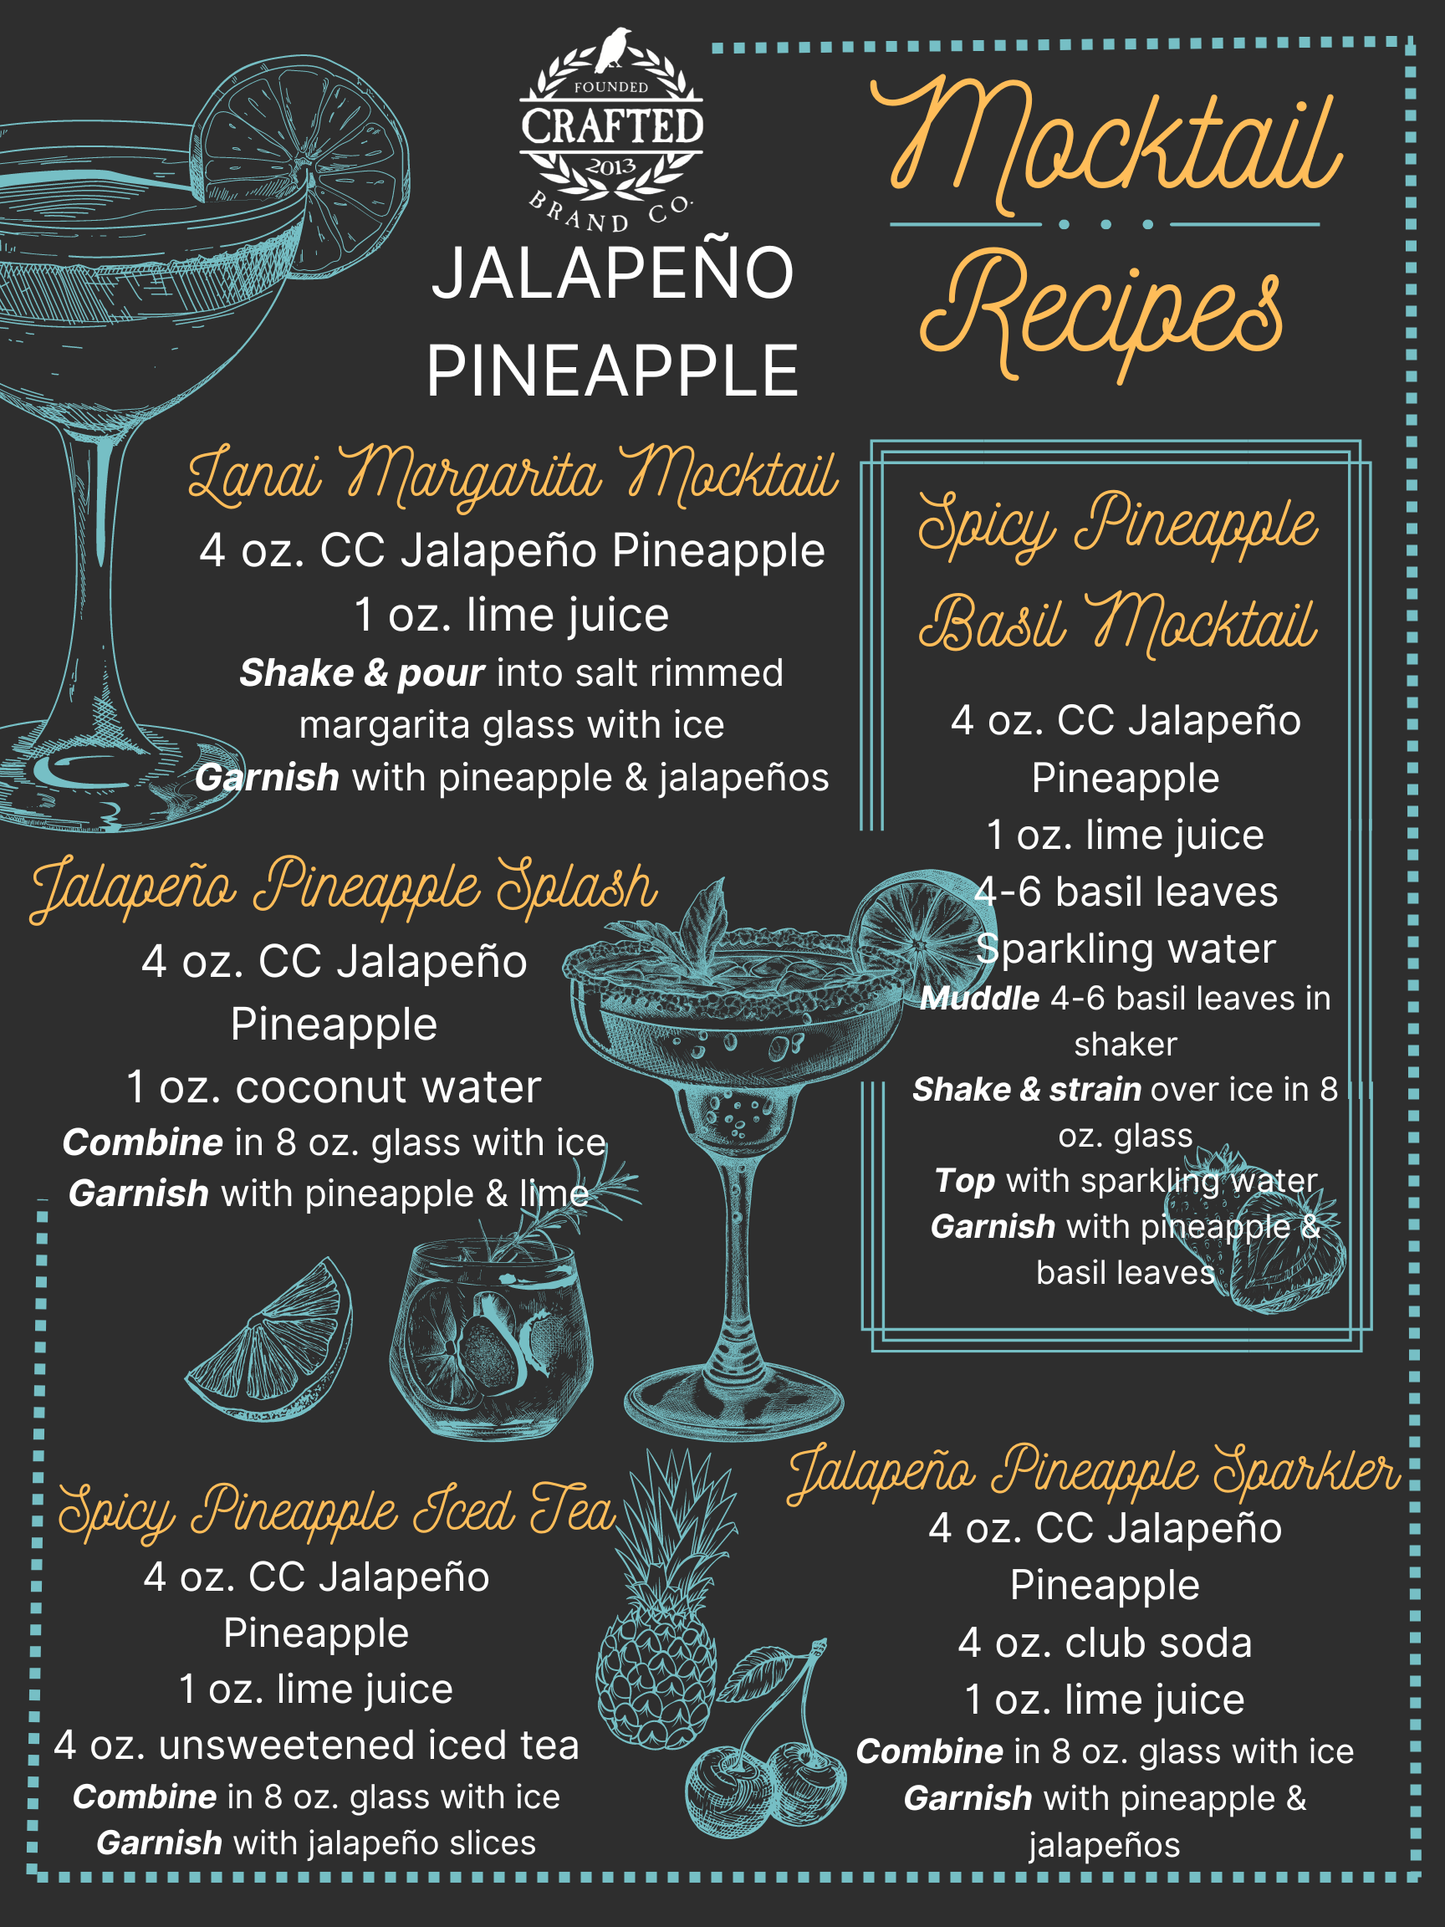 Jalapeño Pineapple Cocktail Or Mocktail Mix